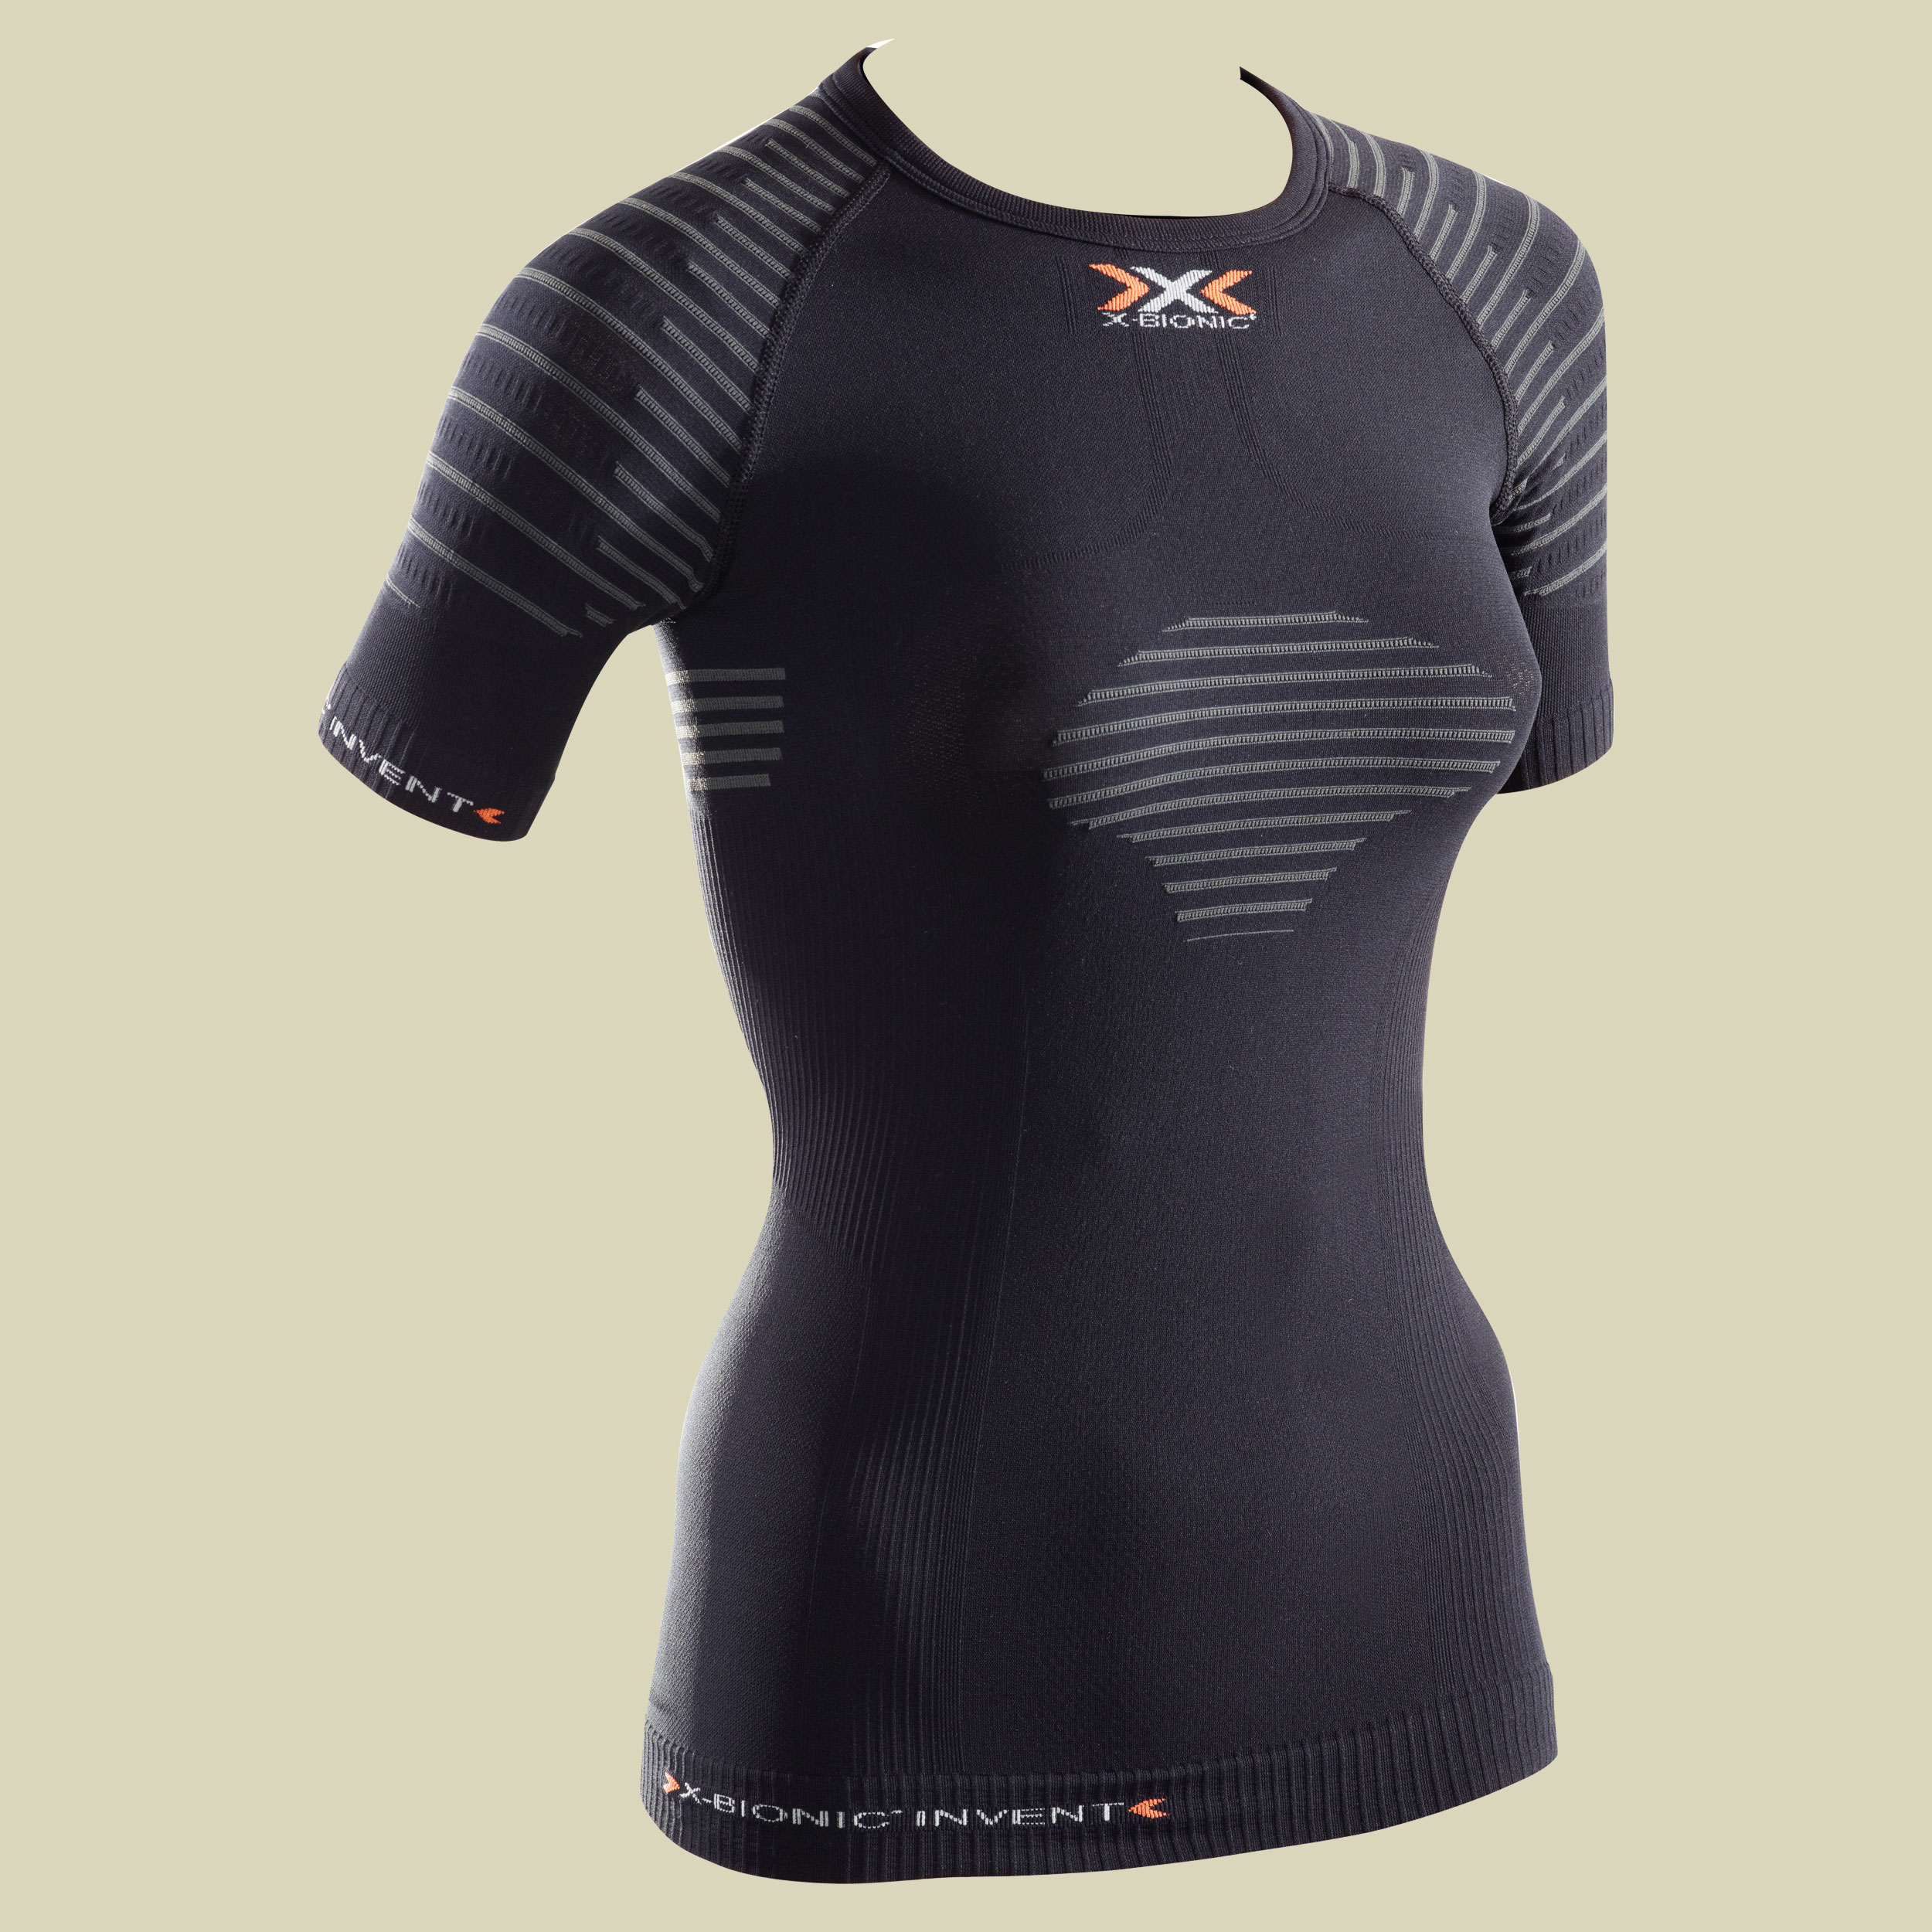 X-Bionic Lady Invent Light UW Shirt SH_SL Größe XS Farbe black anthracite